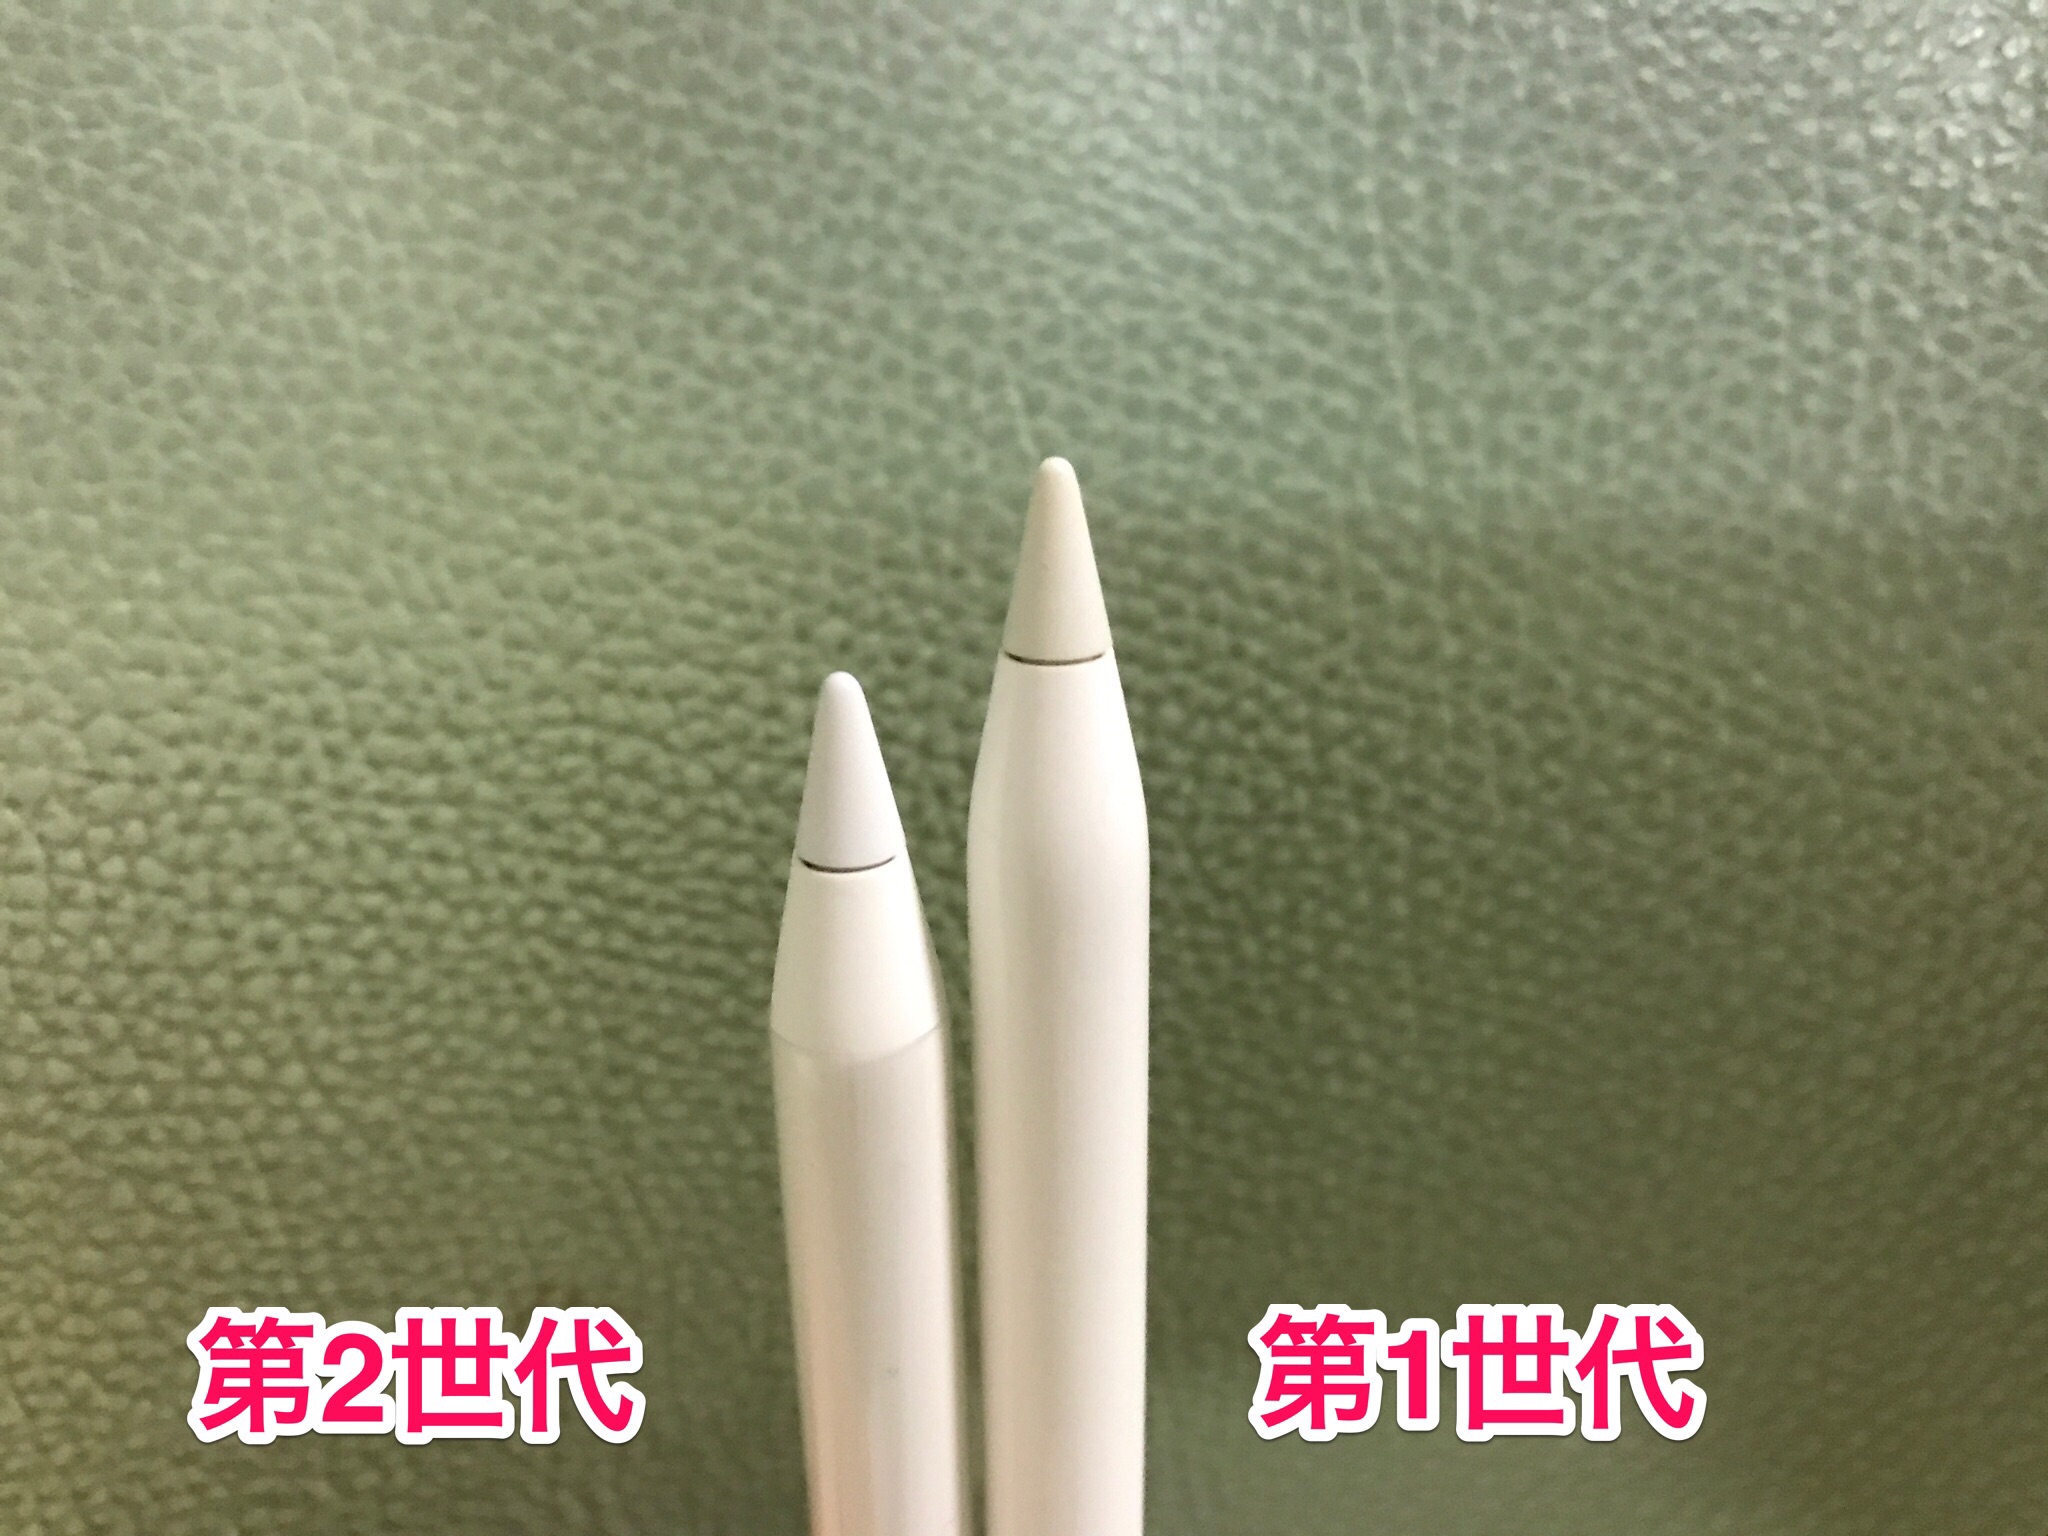 PC/タブレット その他 Apple Pencil 第2世代 umbandung.ac.id